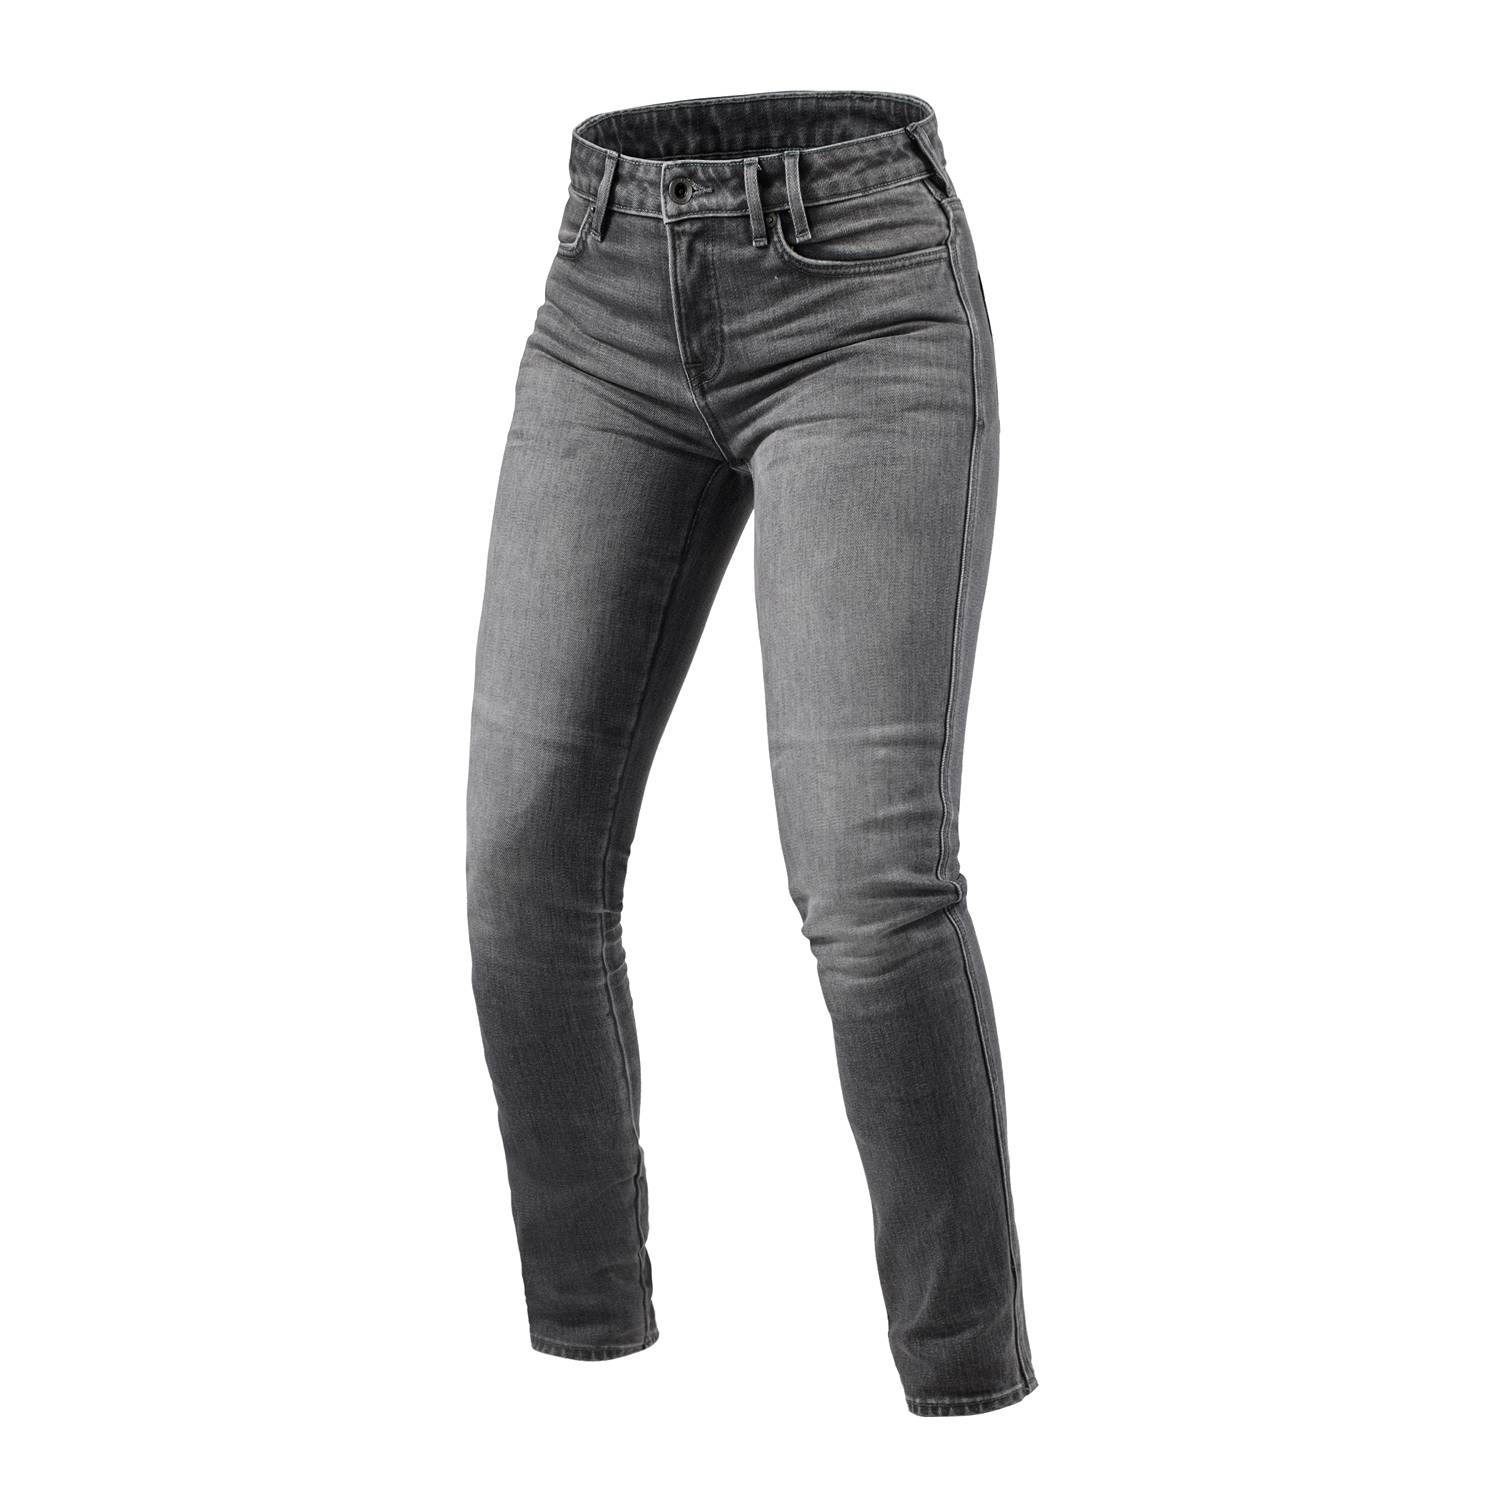 Image of REV'IT! Jeans Shelby 2 Ladies SK Medium Grey Stone L30 Size L30/W32 EN